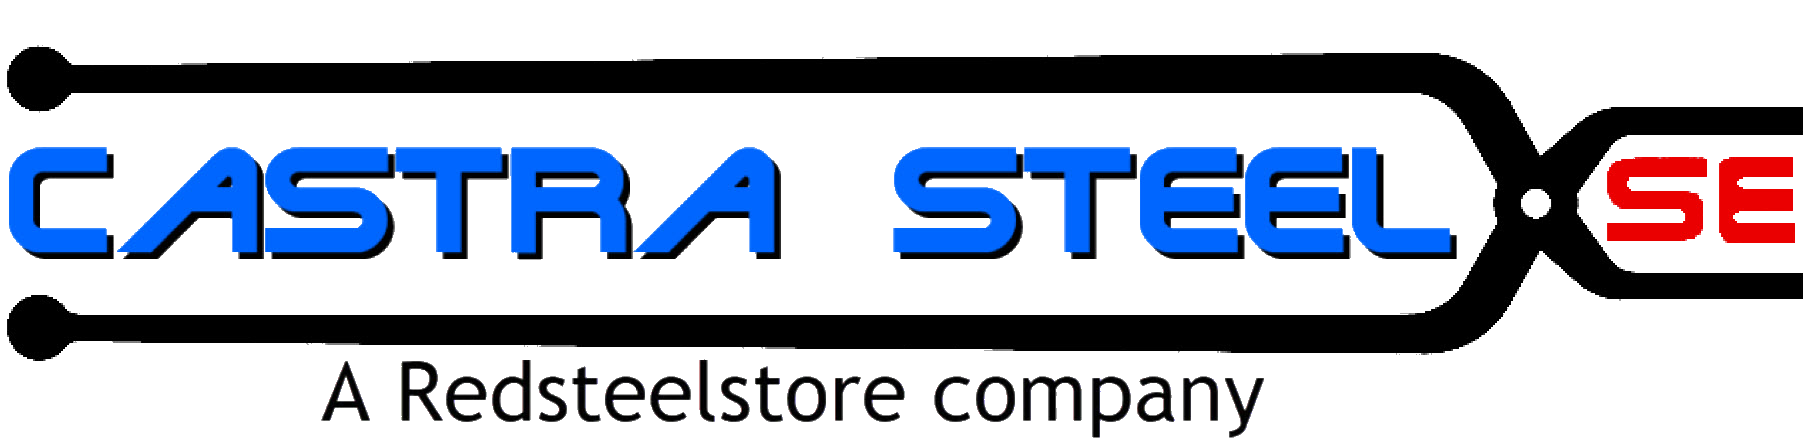 Castra Steel